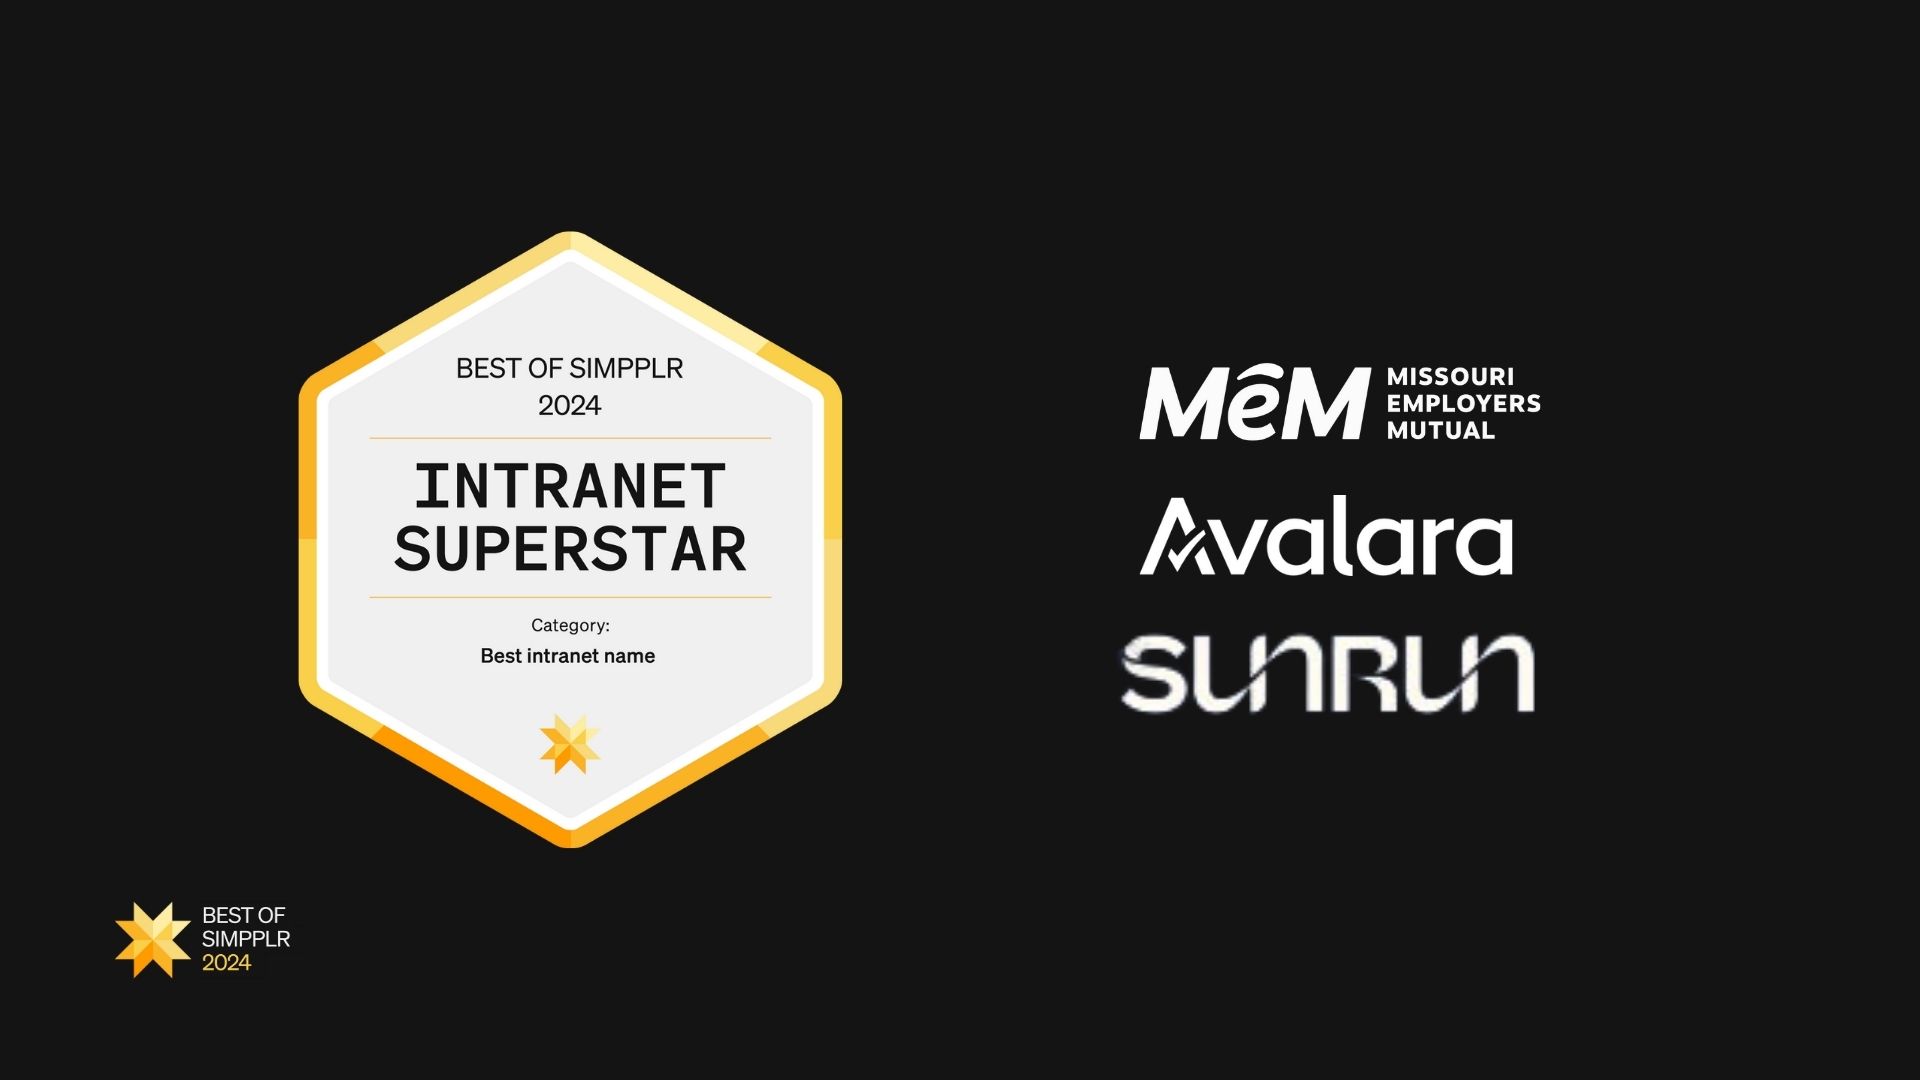 Best of Simpplr 2024 intranet contest winners - Best intranet name: Avalara, Sunrun, Missouri Employees Mutual (MEM)